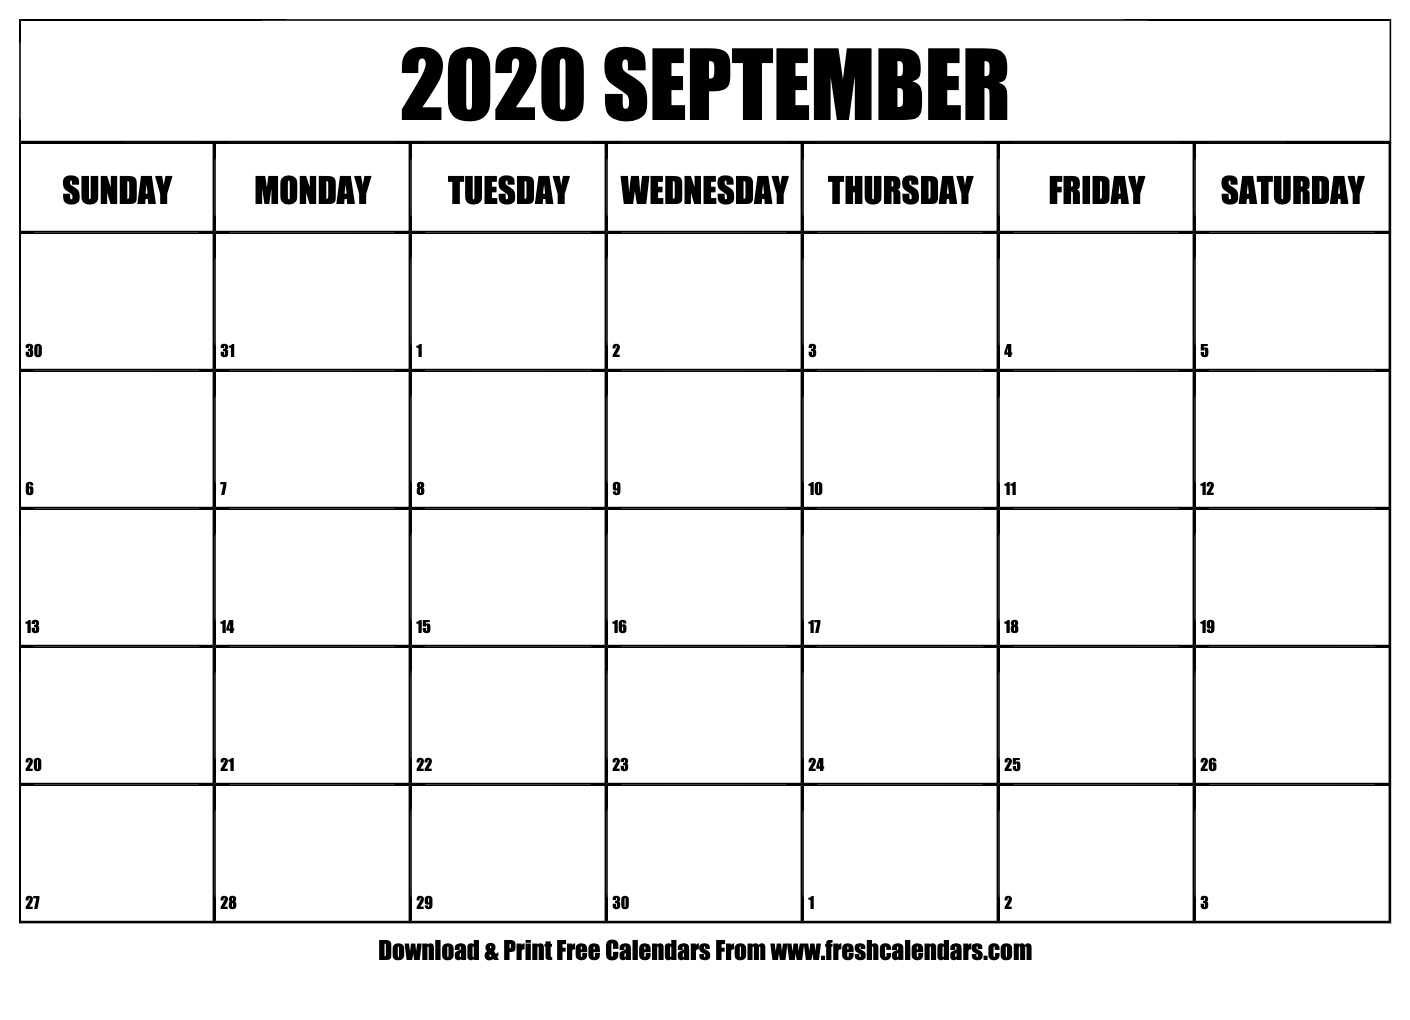 September 2020 Calendar Printable - Fresh Calendars